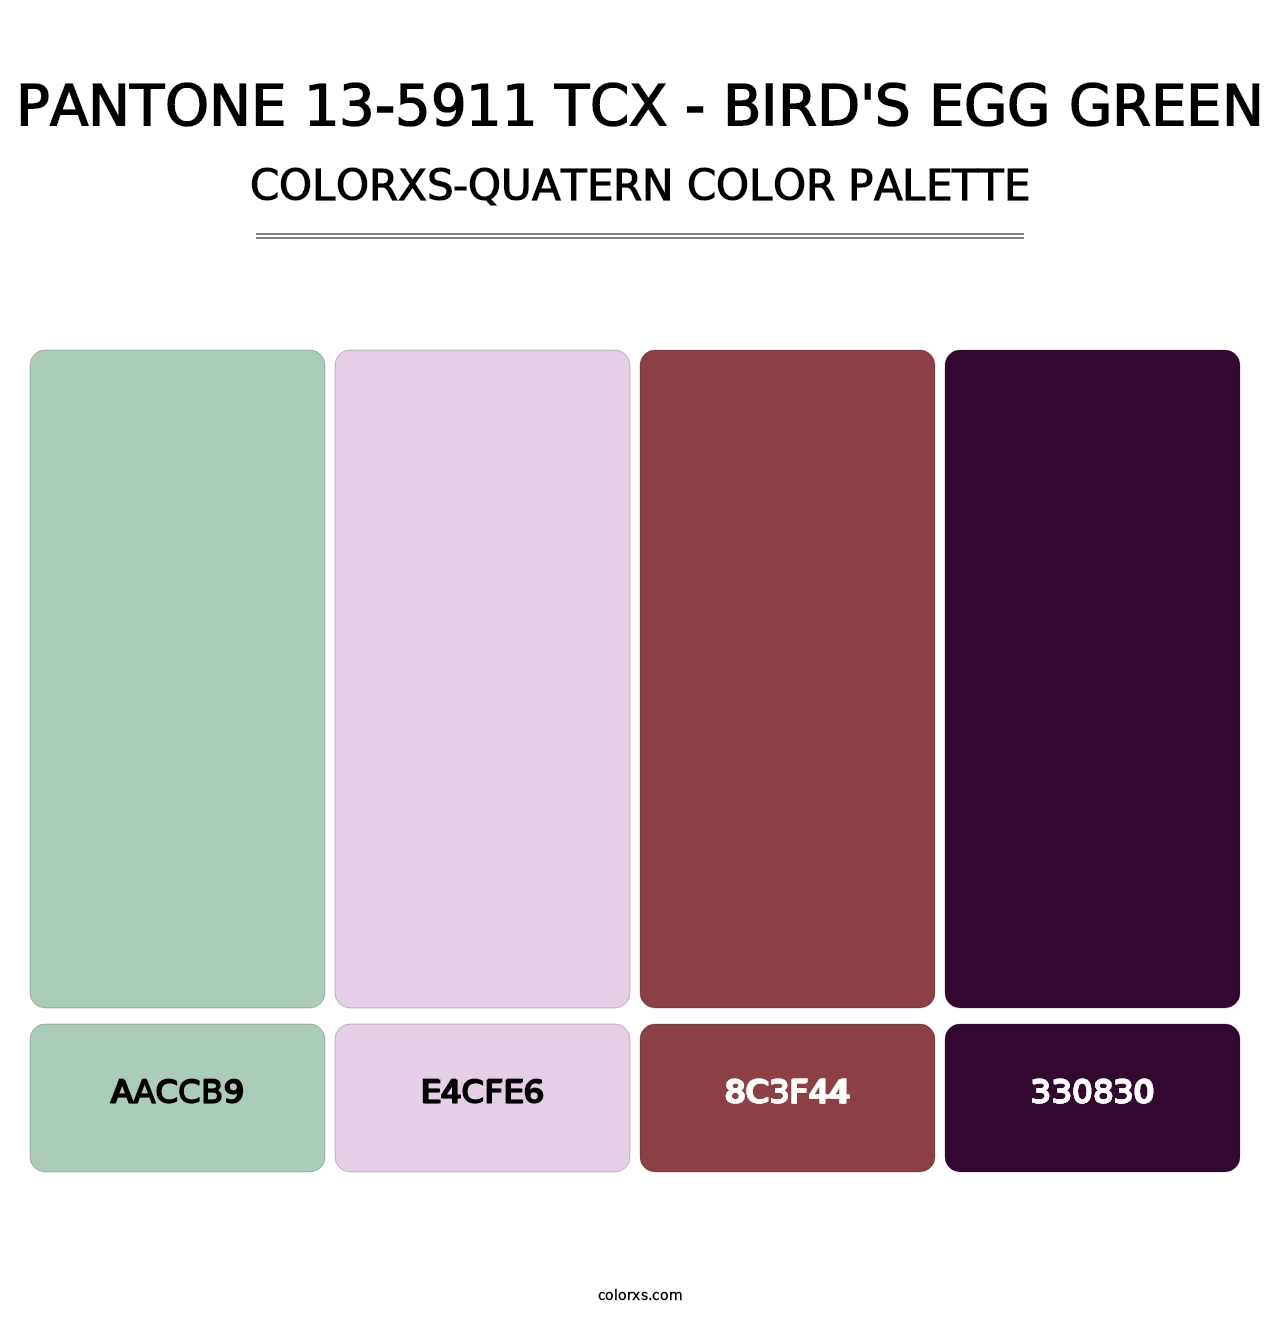 PANTONE 13-5911 TCX - Bird's Egg Green - Colorxs Quatern Palette